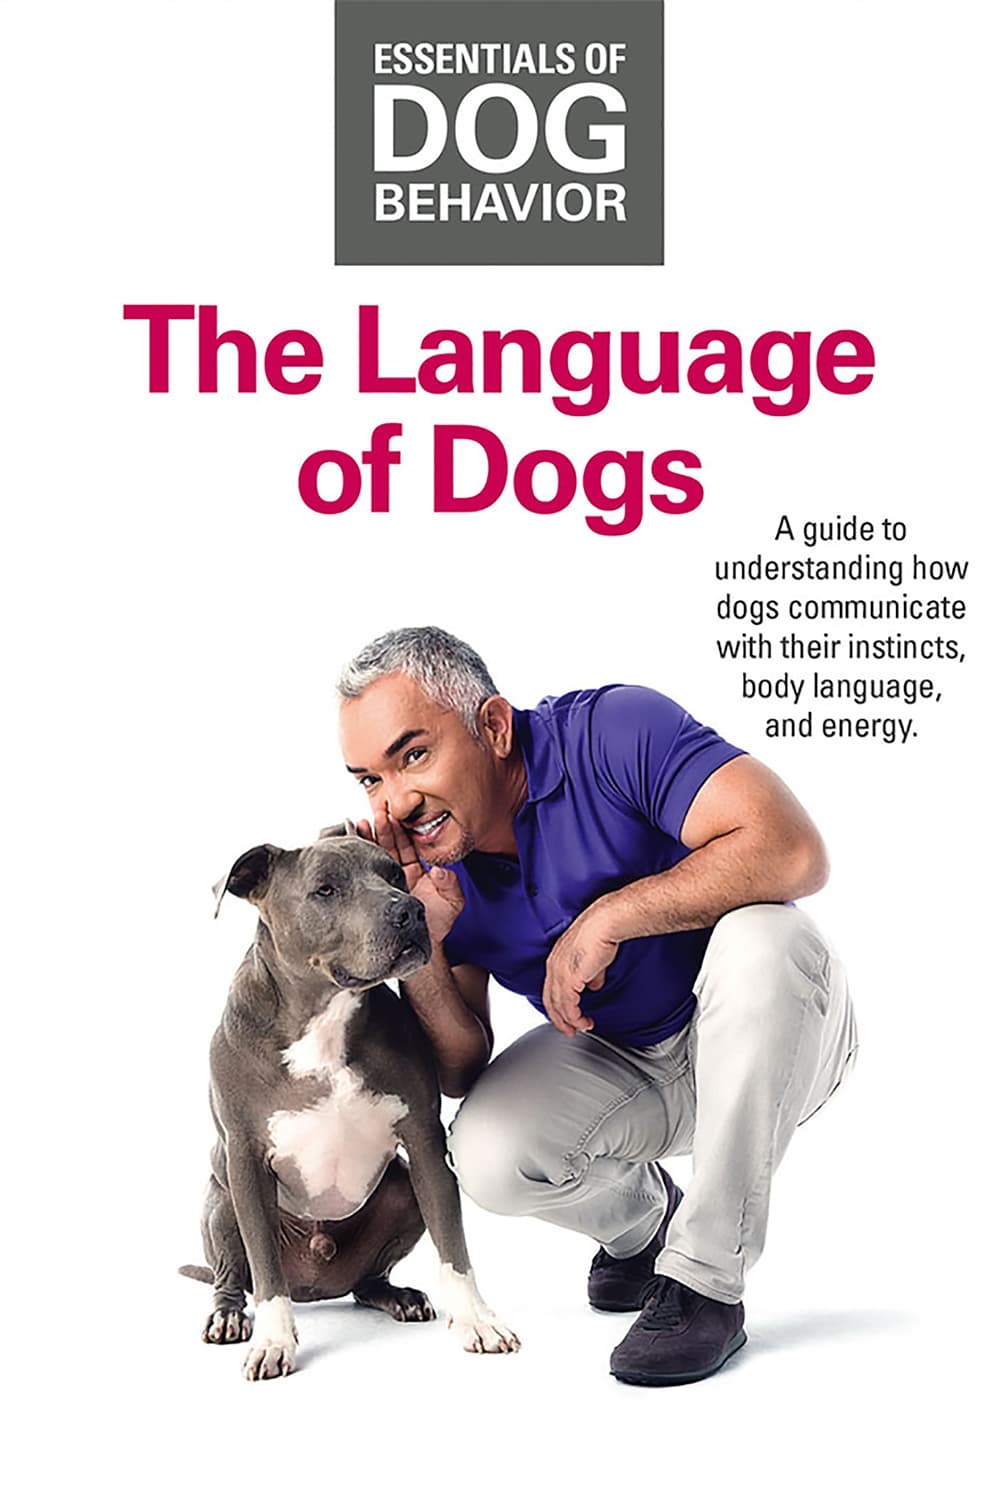 Essentials of Dog Behavior: The Language of Dogs